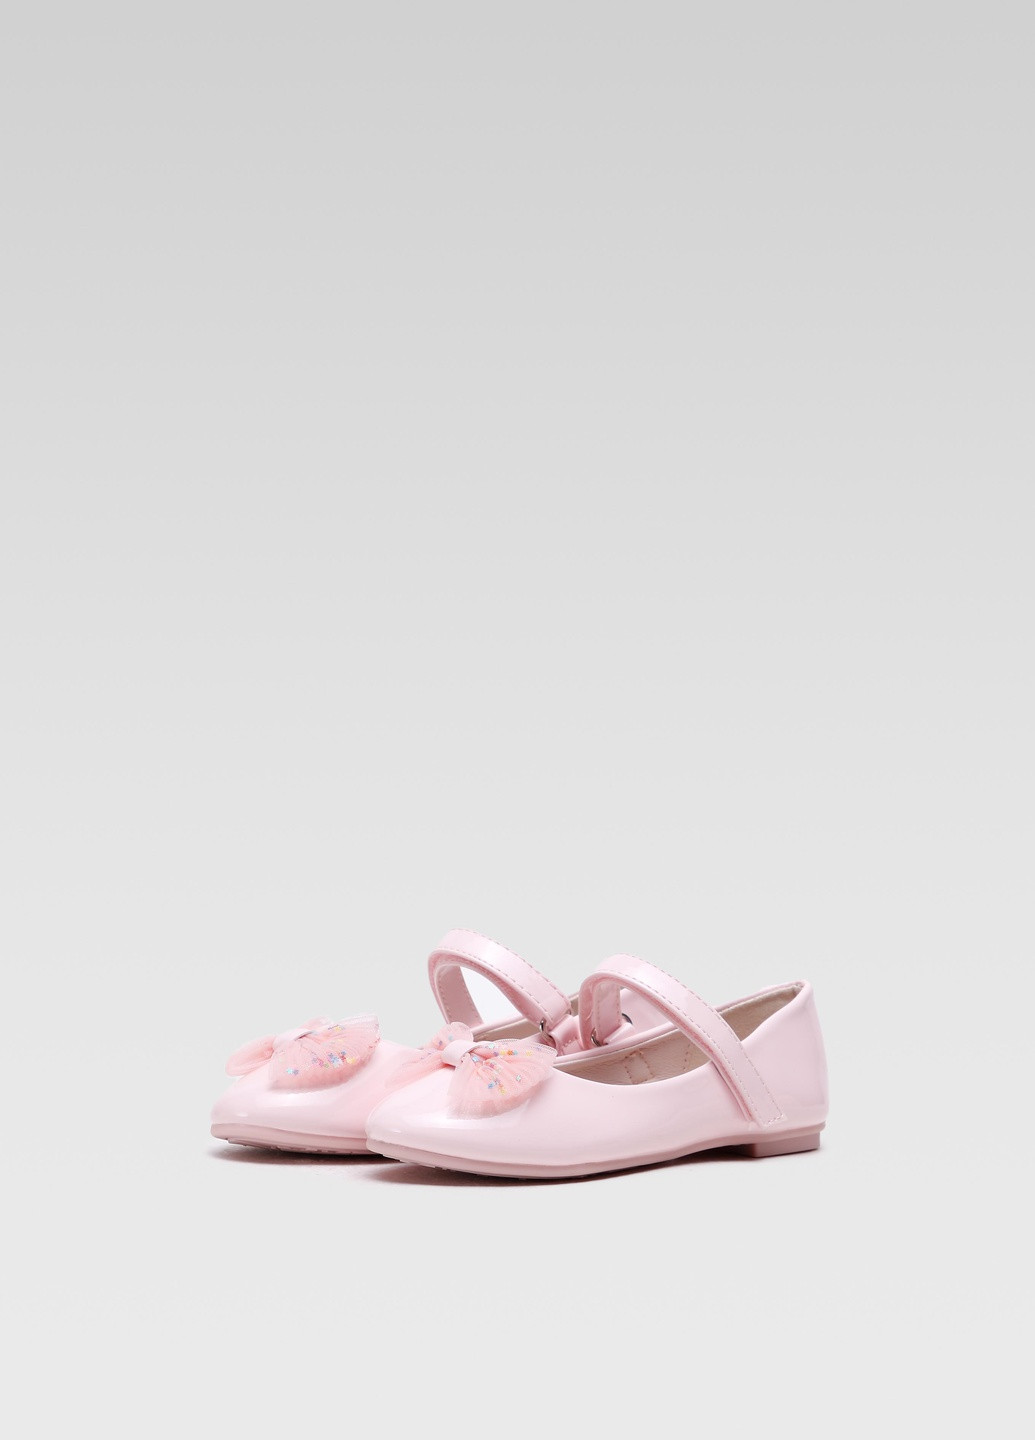 Светло-розовые кэжуал осенние туфли cm200109-15 Nelli Blu